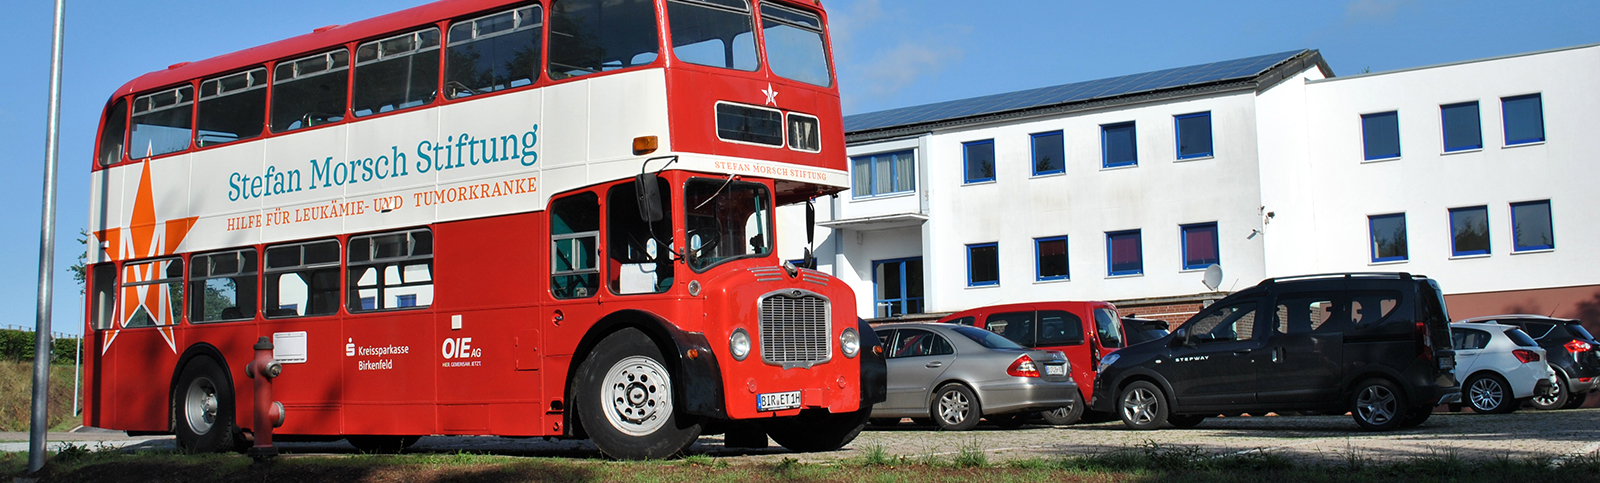 Bristolbus Stefan Morsch Stiftung